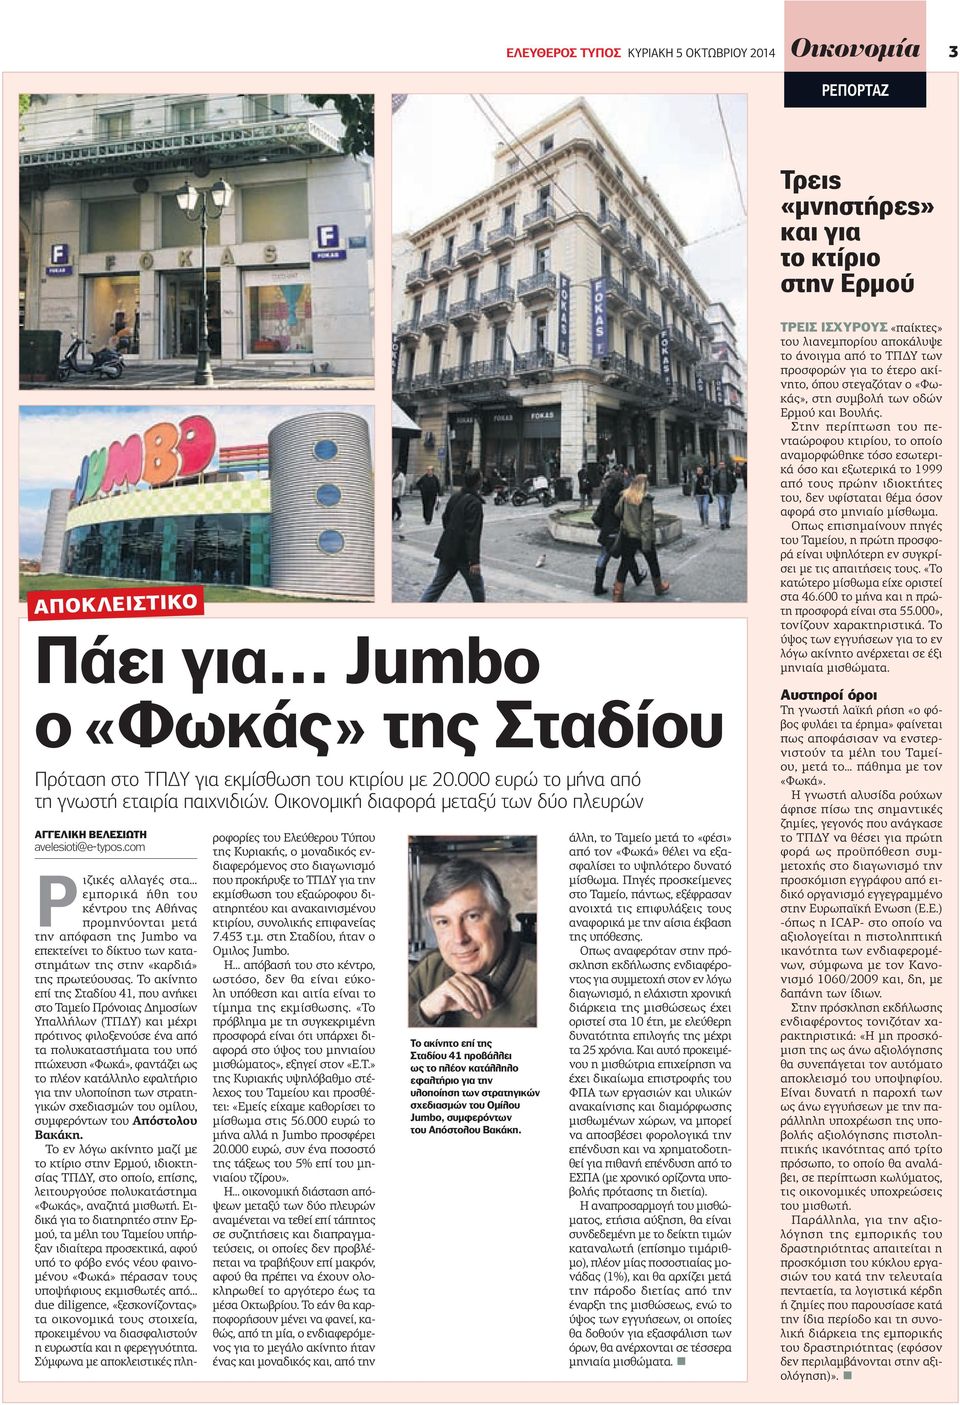 com Ριζικές αλλαγές στα εμπορικά ήθη του κέντρου της Αθήνας προμηνύονται μετά την απόφαση της Jumbo να επεκτείνει το δίκτυο των καταστημάτων της στην «καρδιά» της πρωτεύουσας.